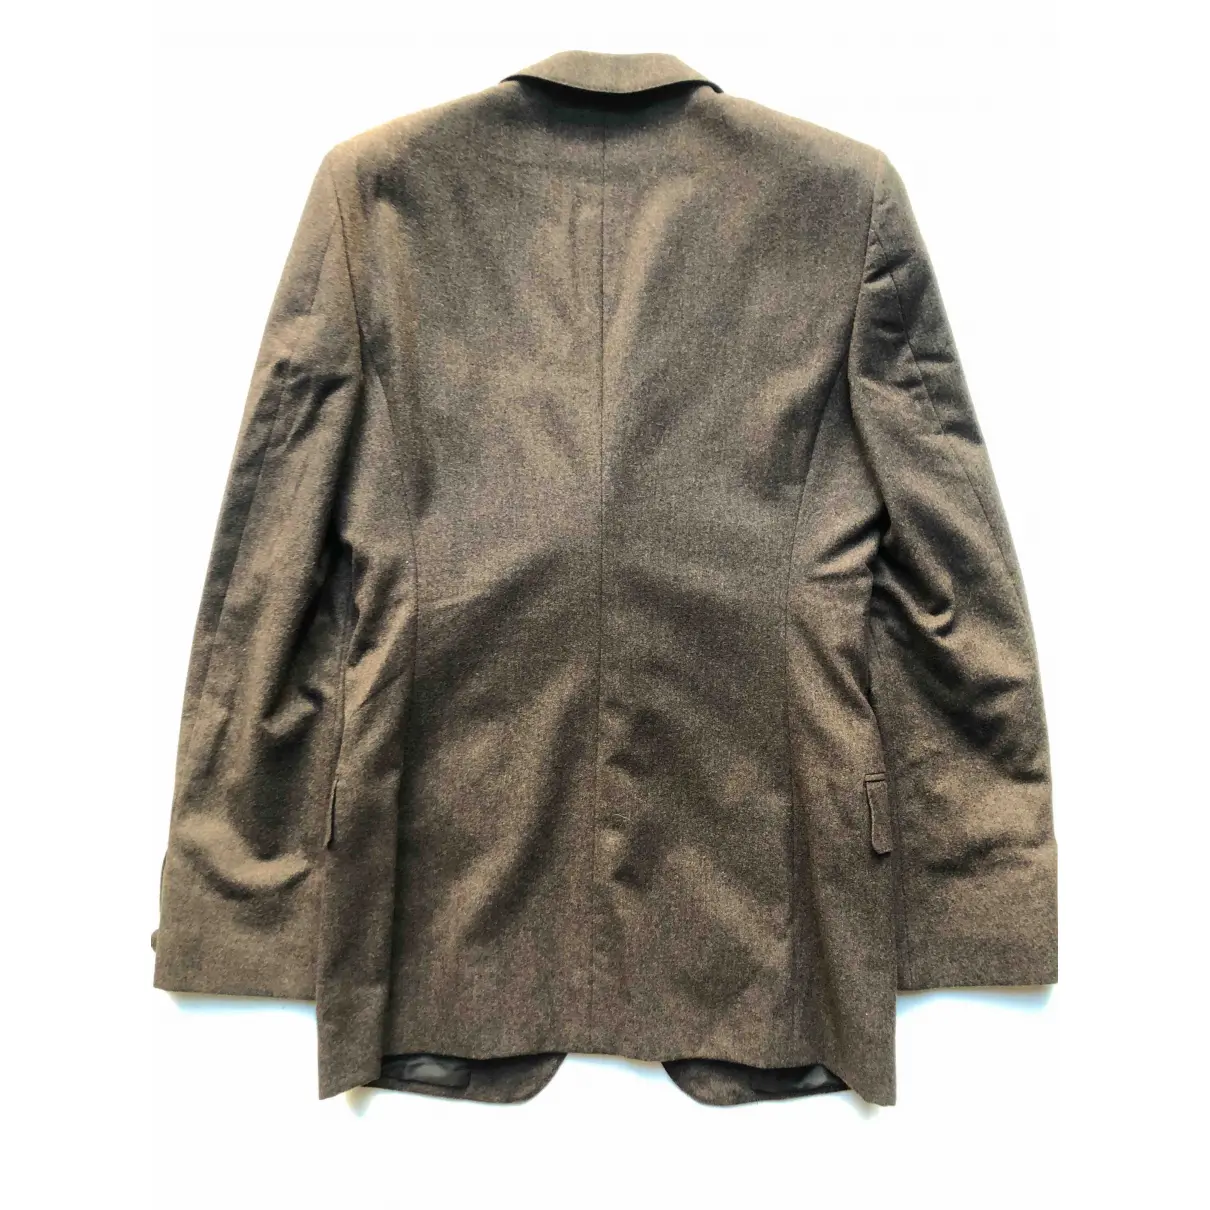 Buy Yves Saint Laurent Wool suit online